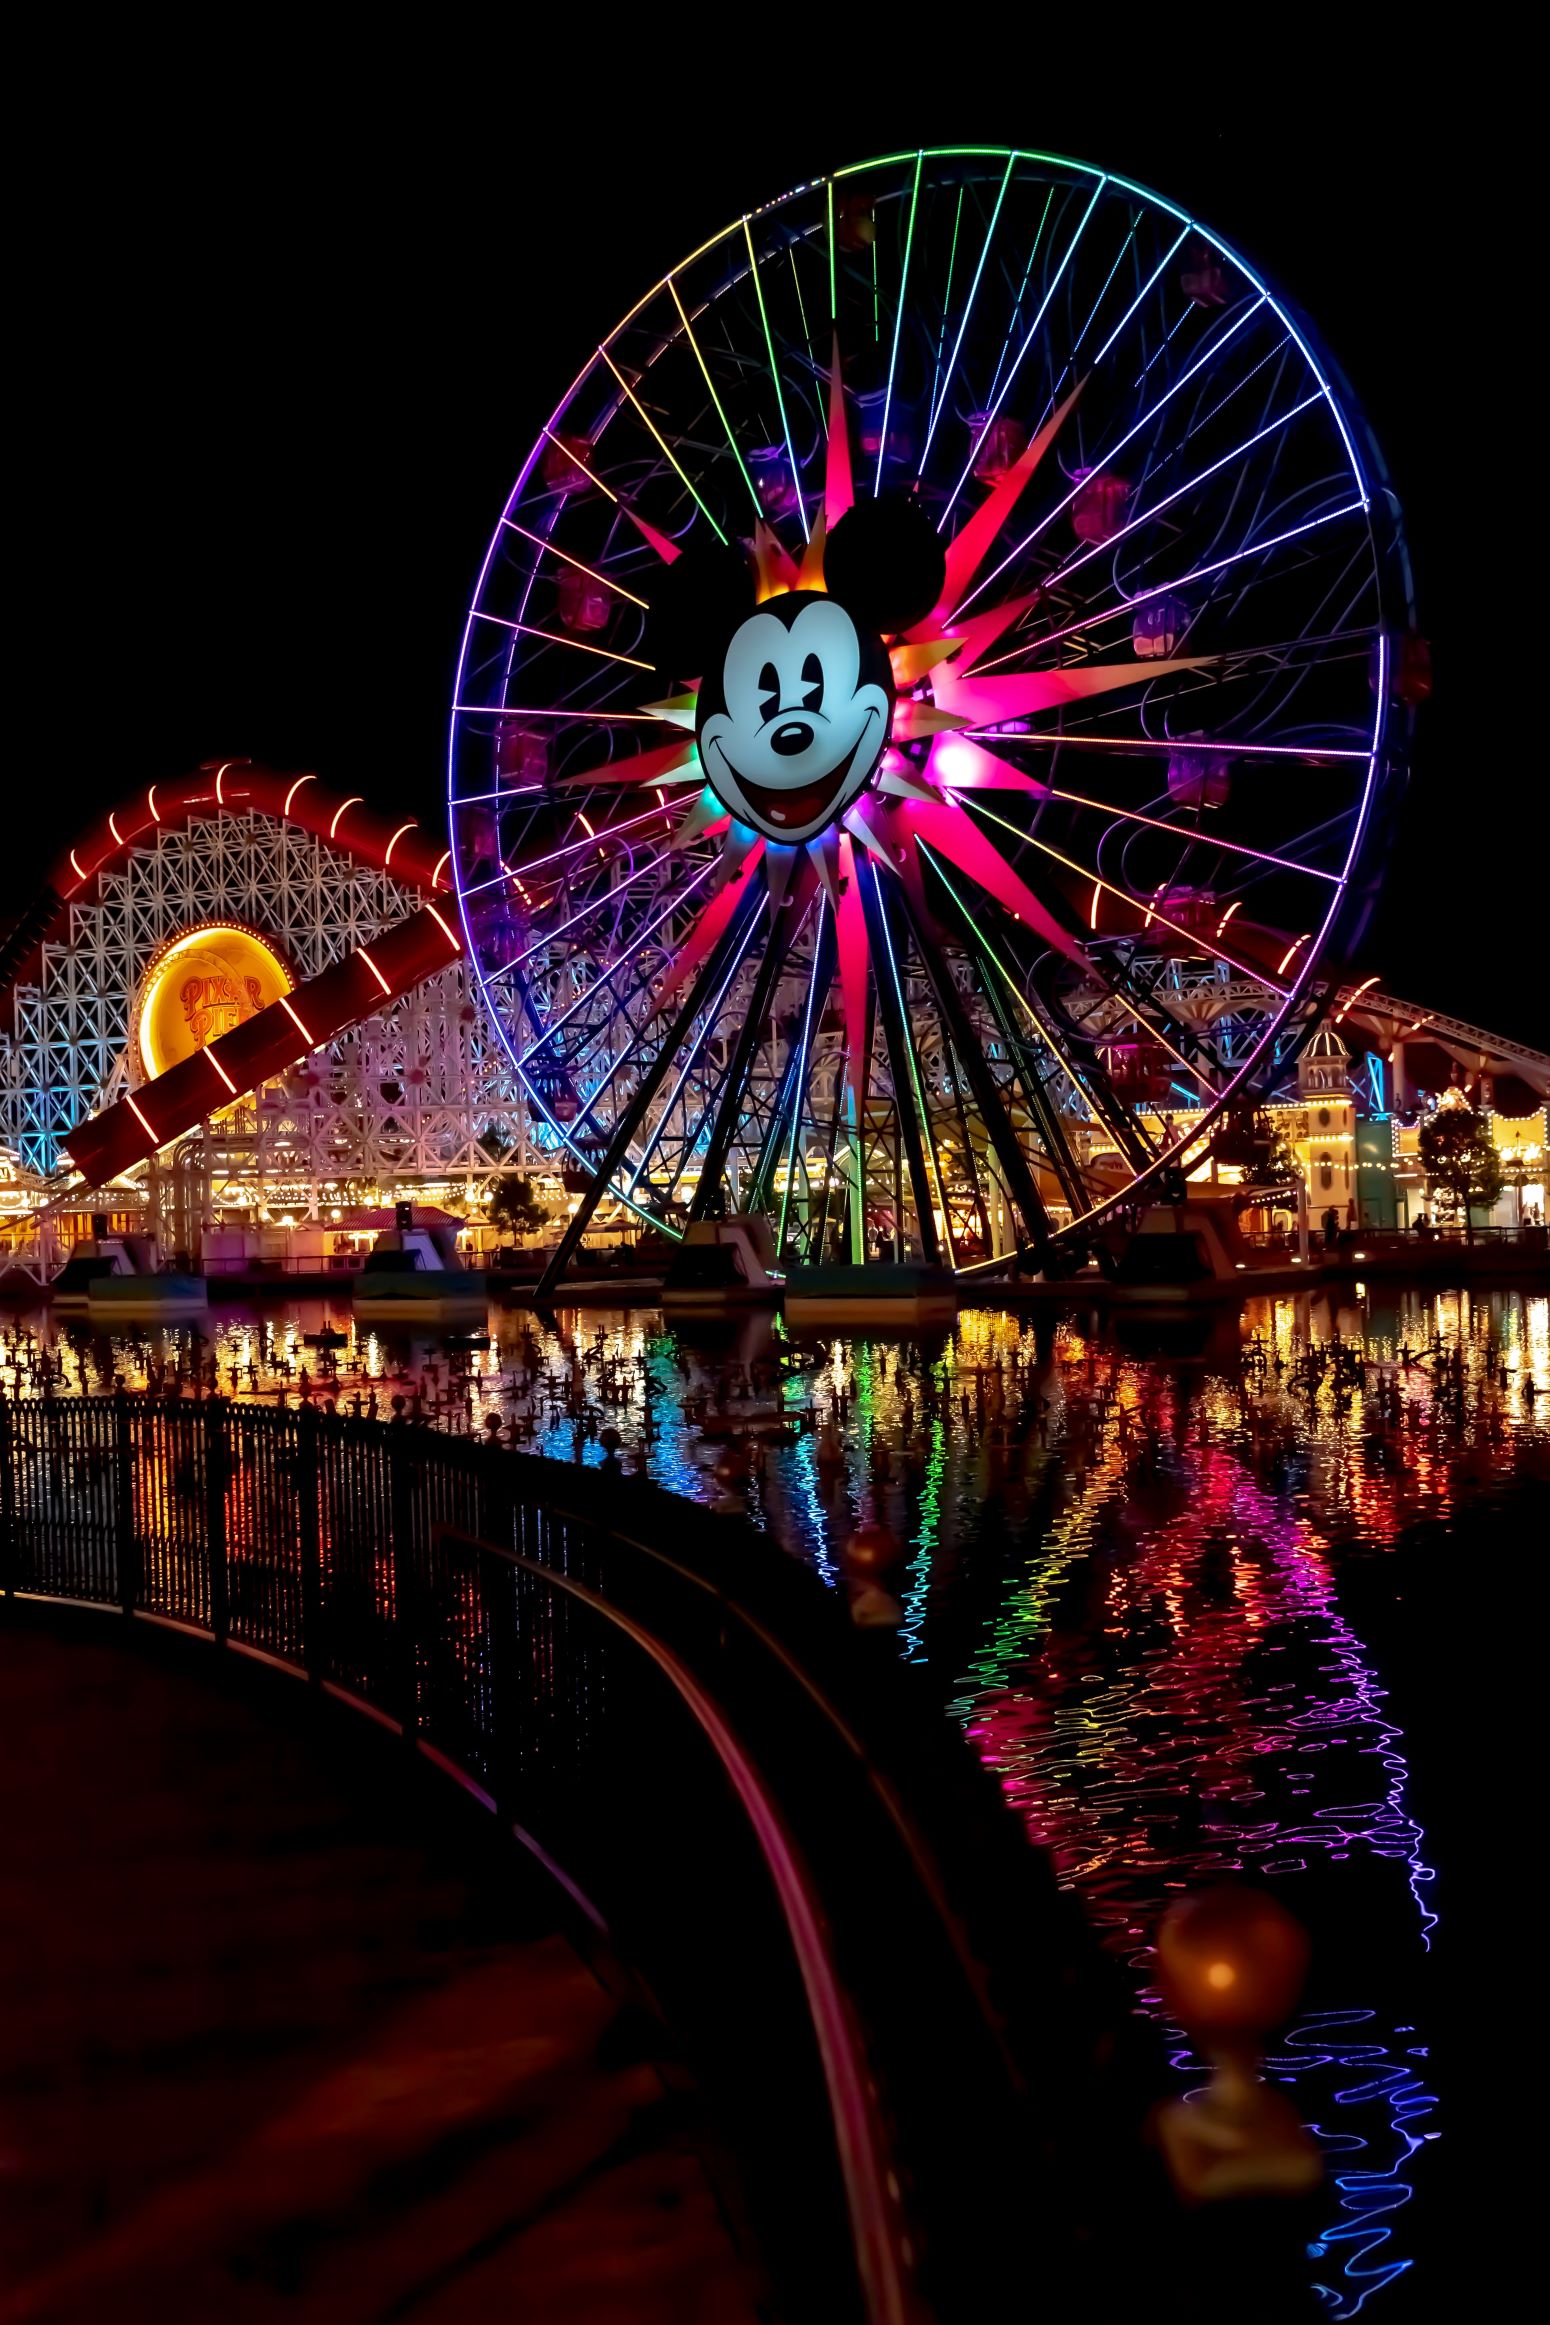 A nighttime image of the Ferris wheel at Disneyland